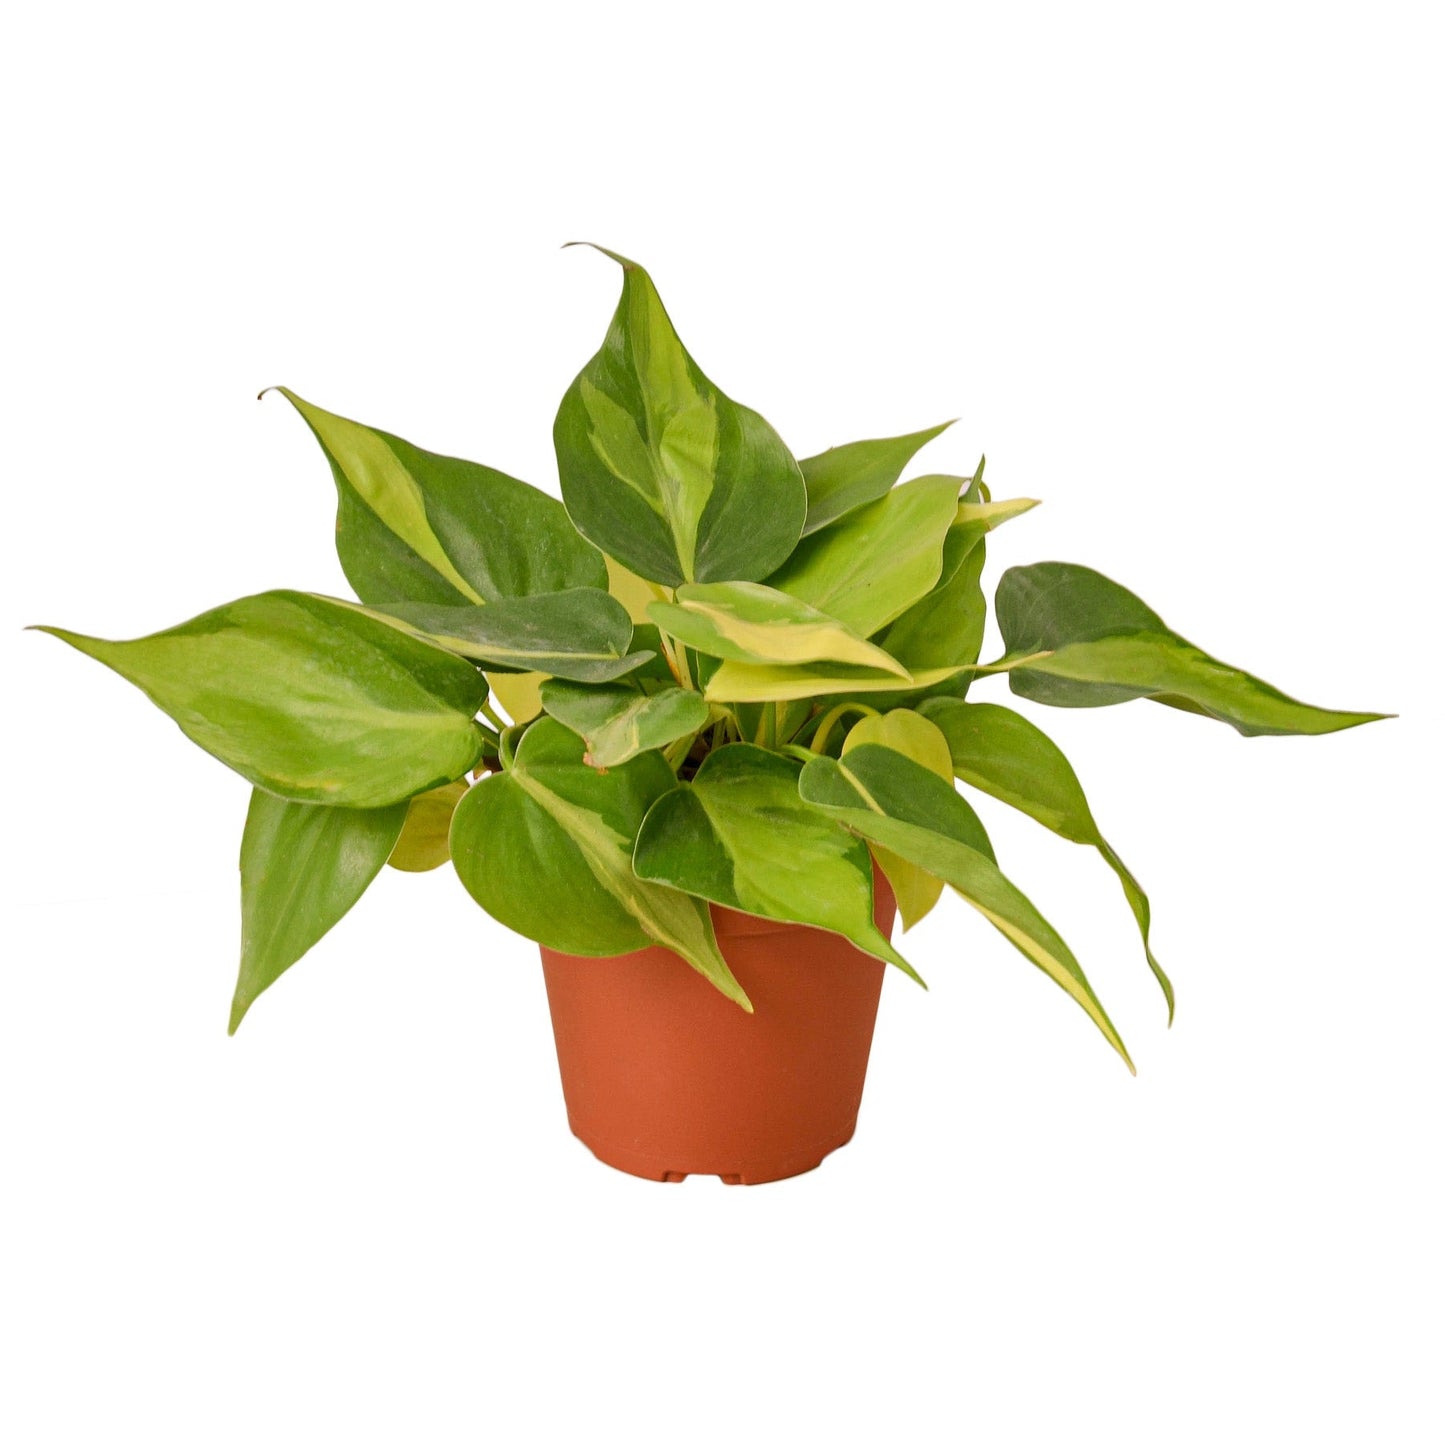 Philodendron 'Brasil' - 4" Pot - NURSERY POT ONLY - One Beleaf Away Plant Studio